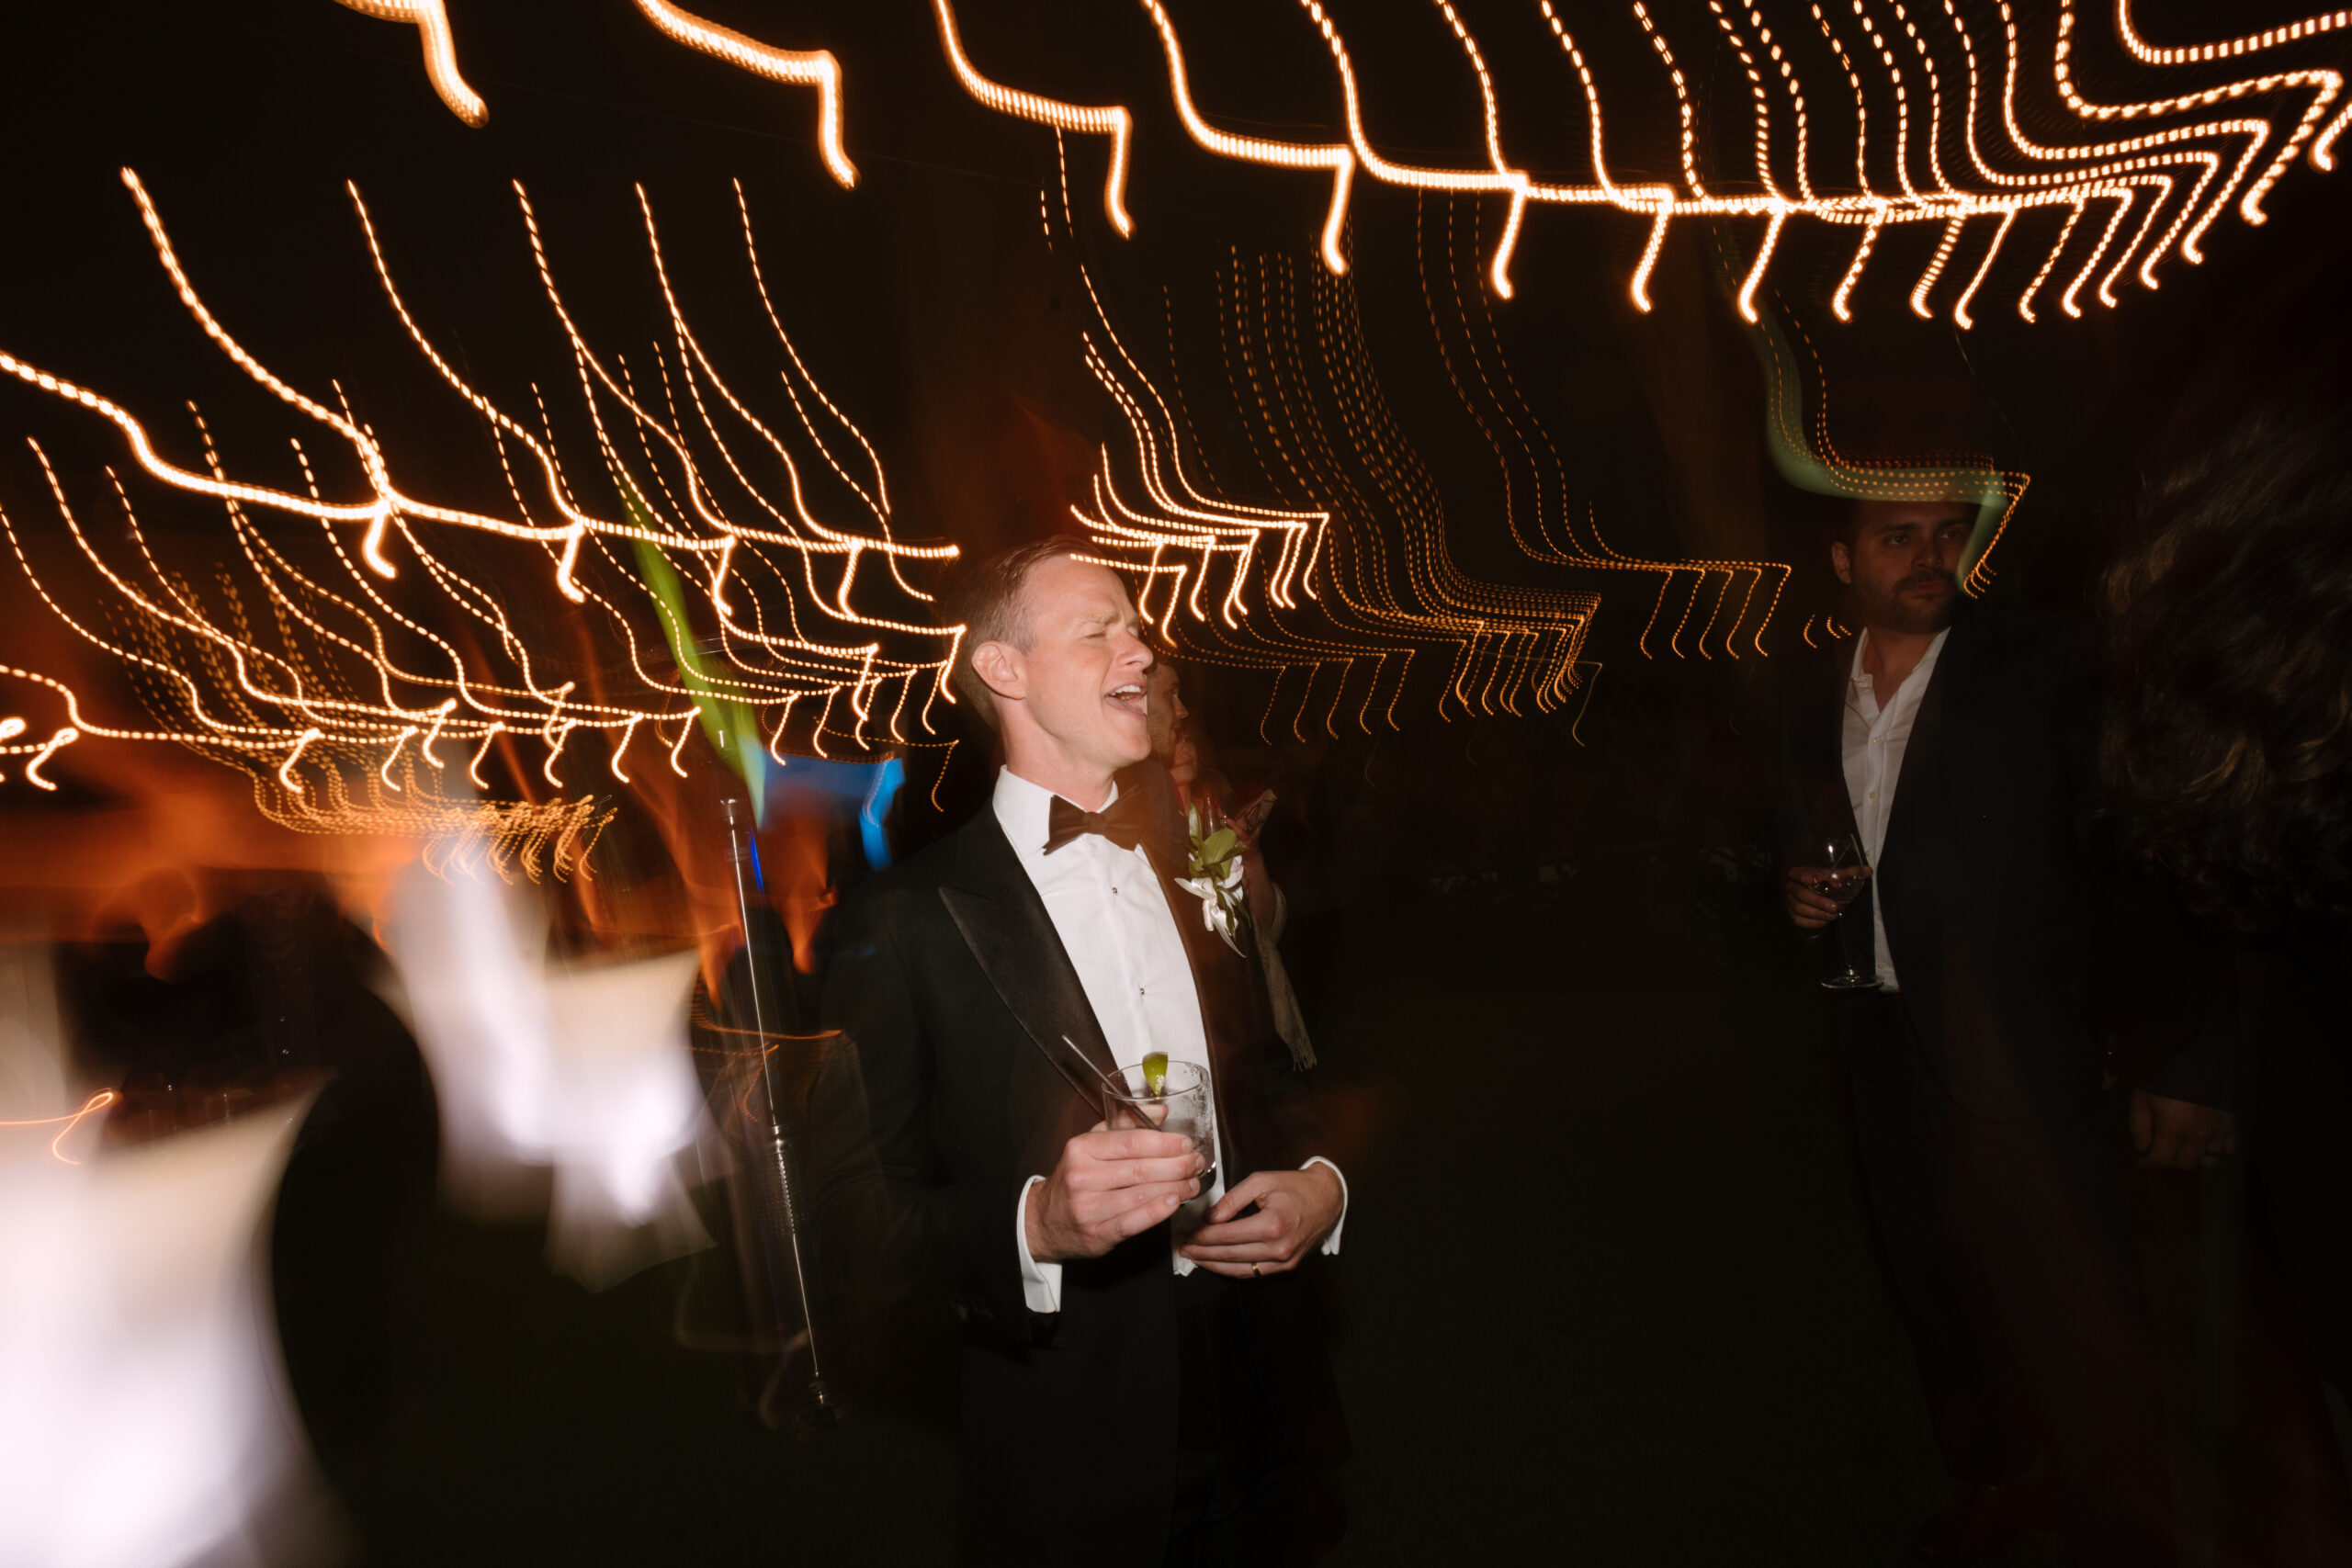 shutter drag photo of groom singing along to music on the dancefloor